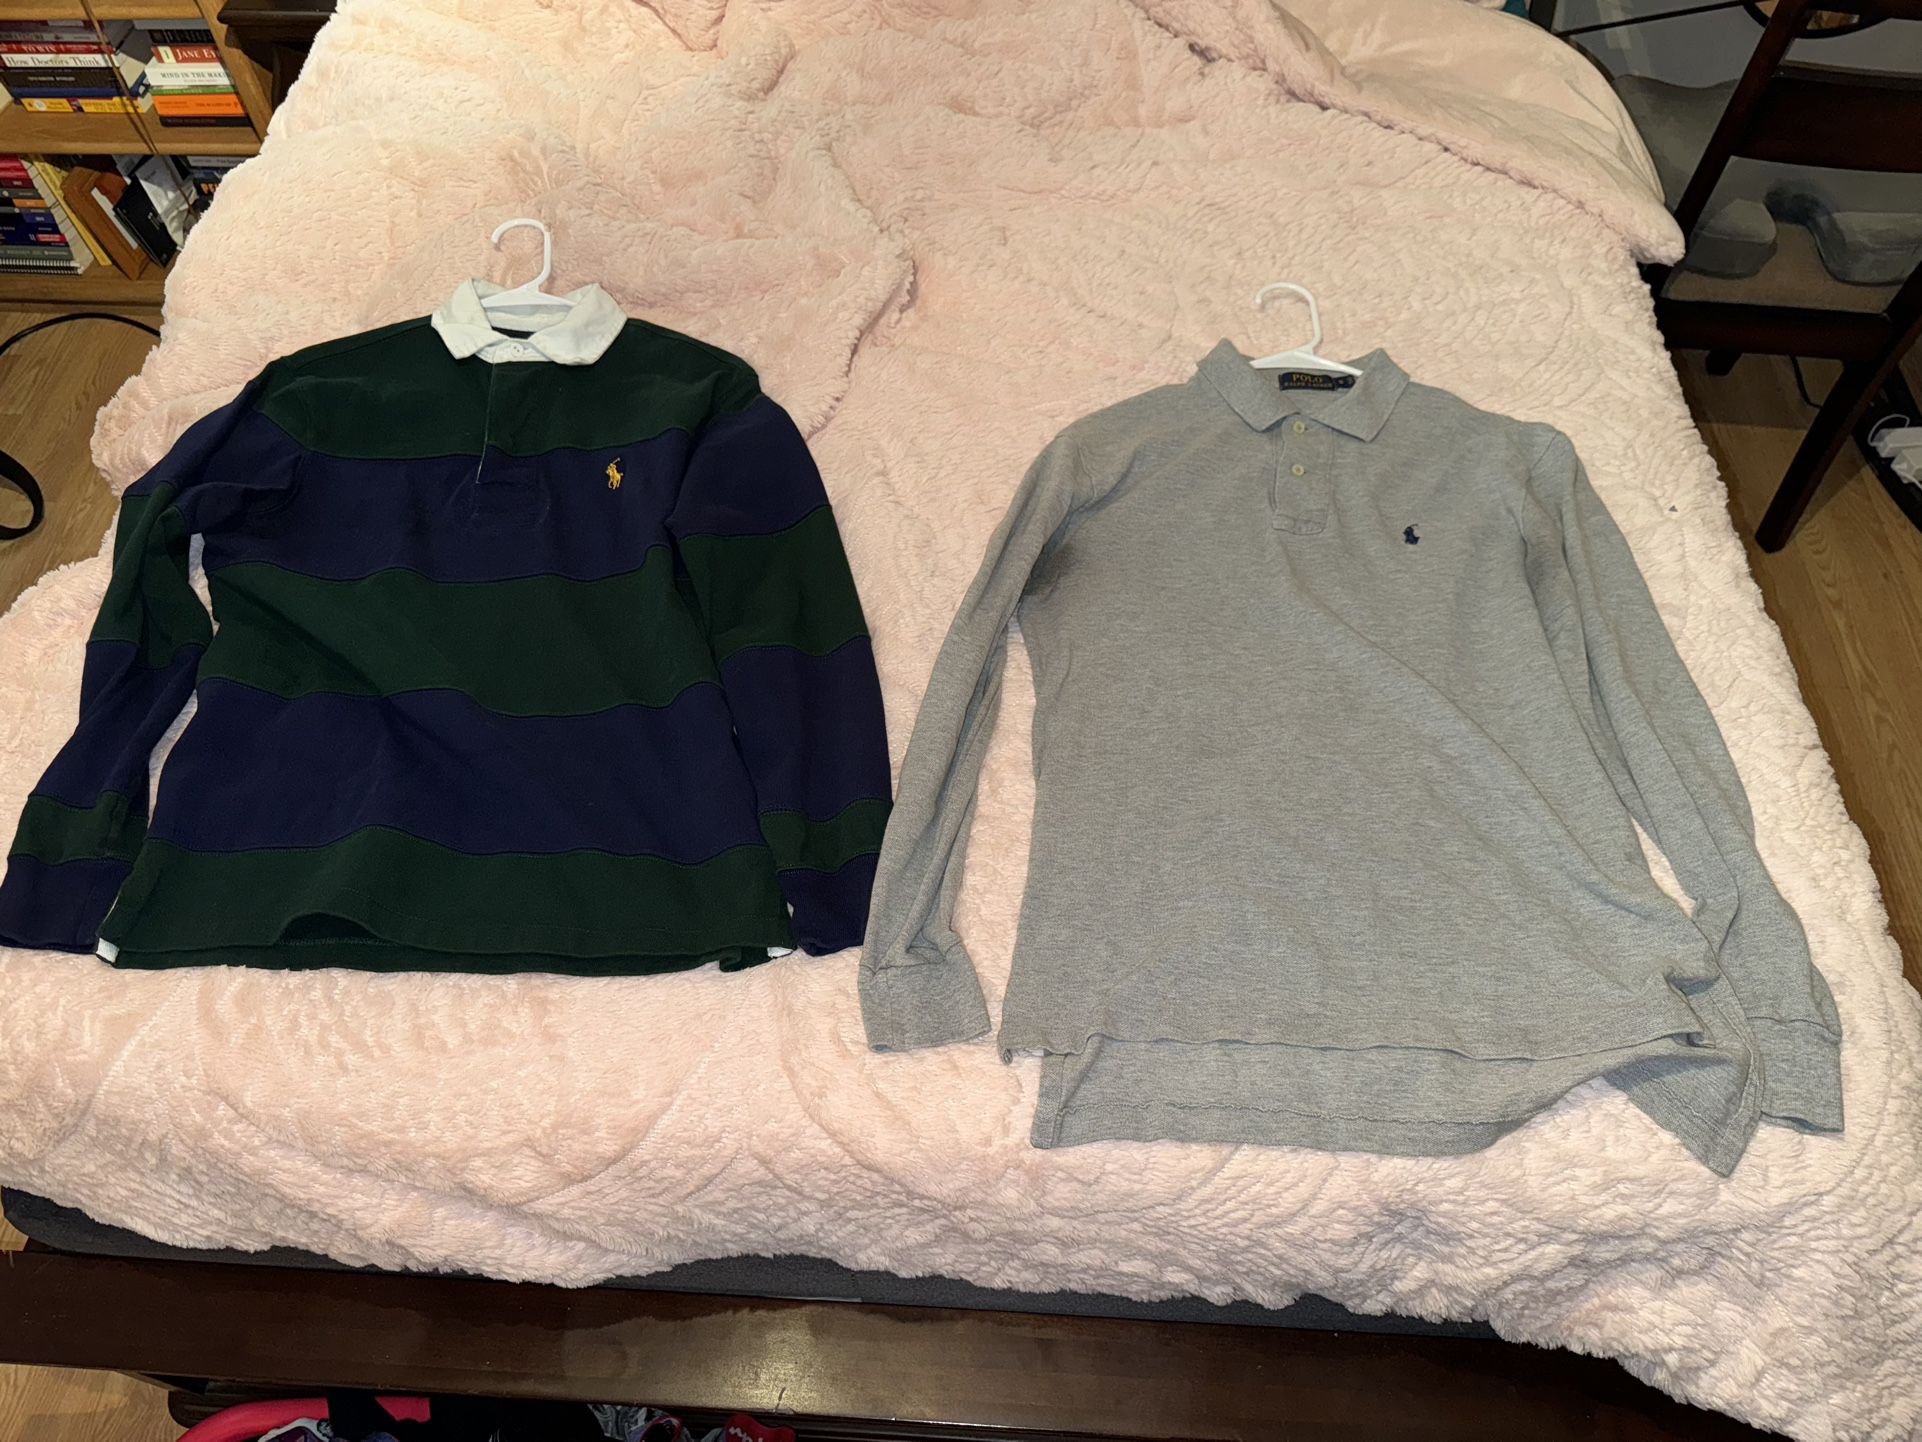 Ralph Lauren Long-Sleeve Polo Shirt Duo - Striped Navy Blue/Green & Heather Grey - Size S